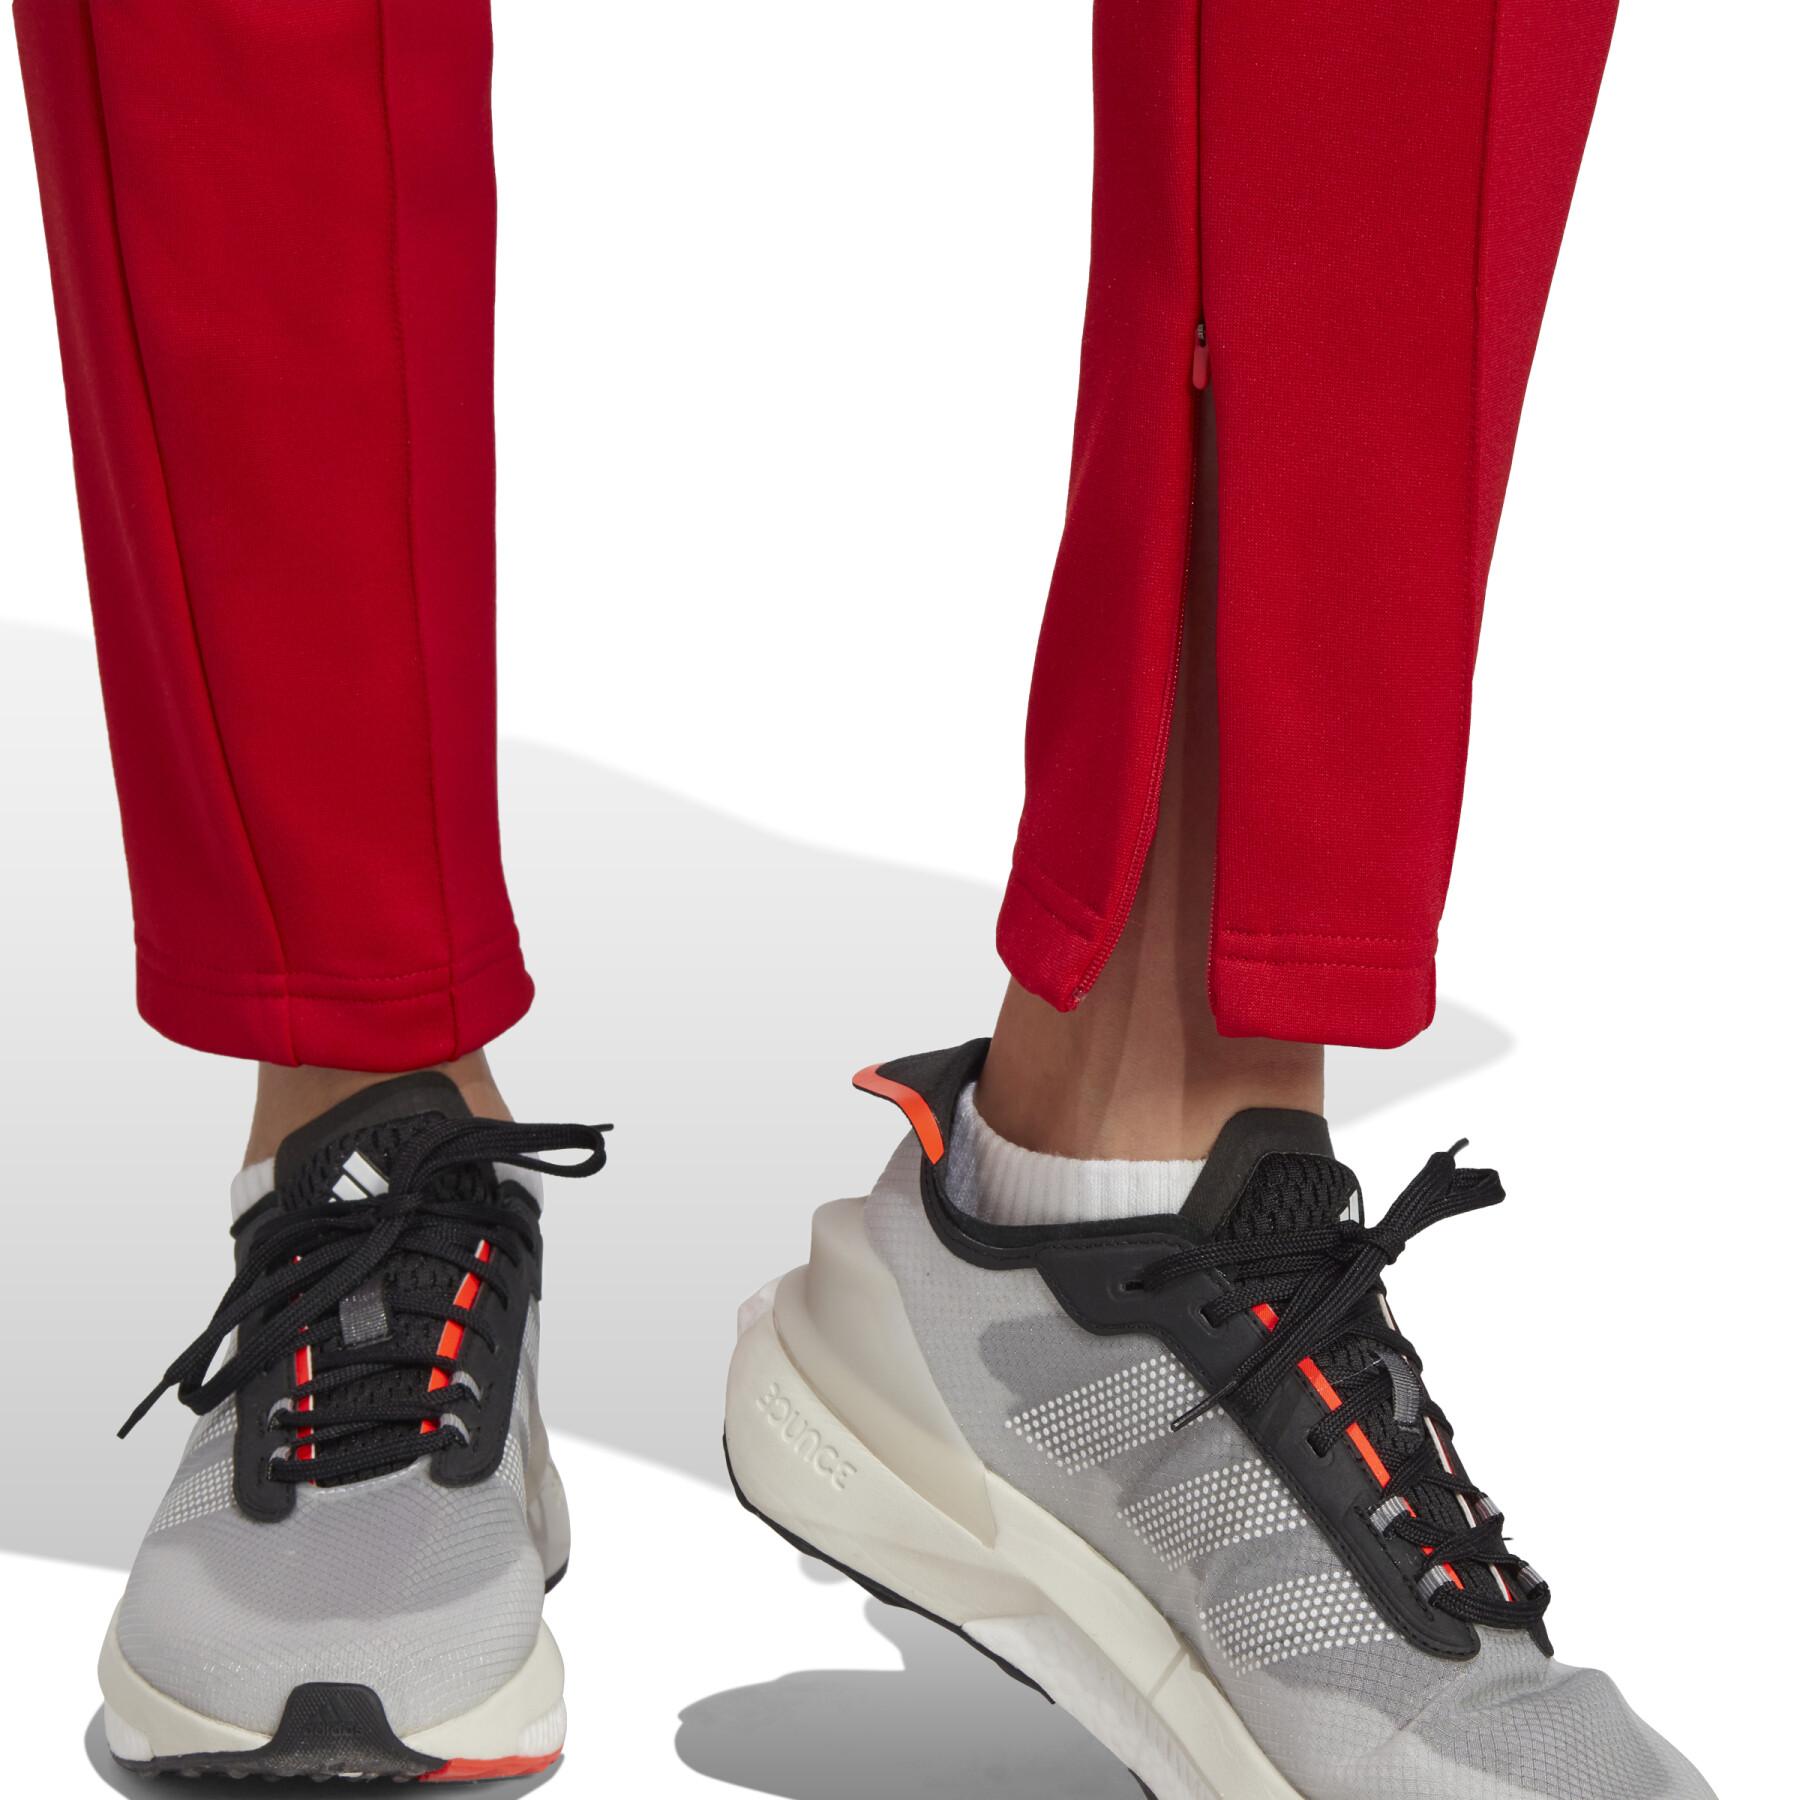 Jogging woman adidas Tiro Suit Up Lifestyle